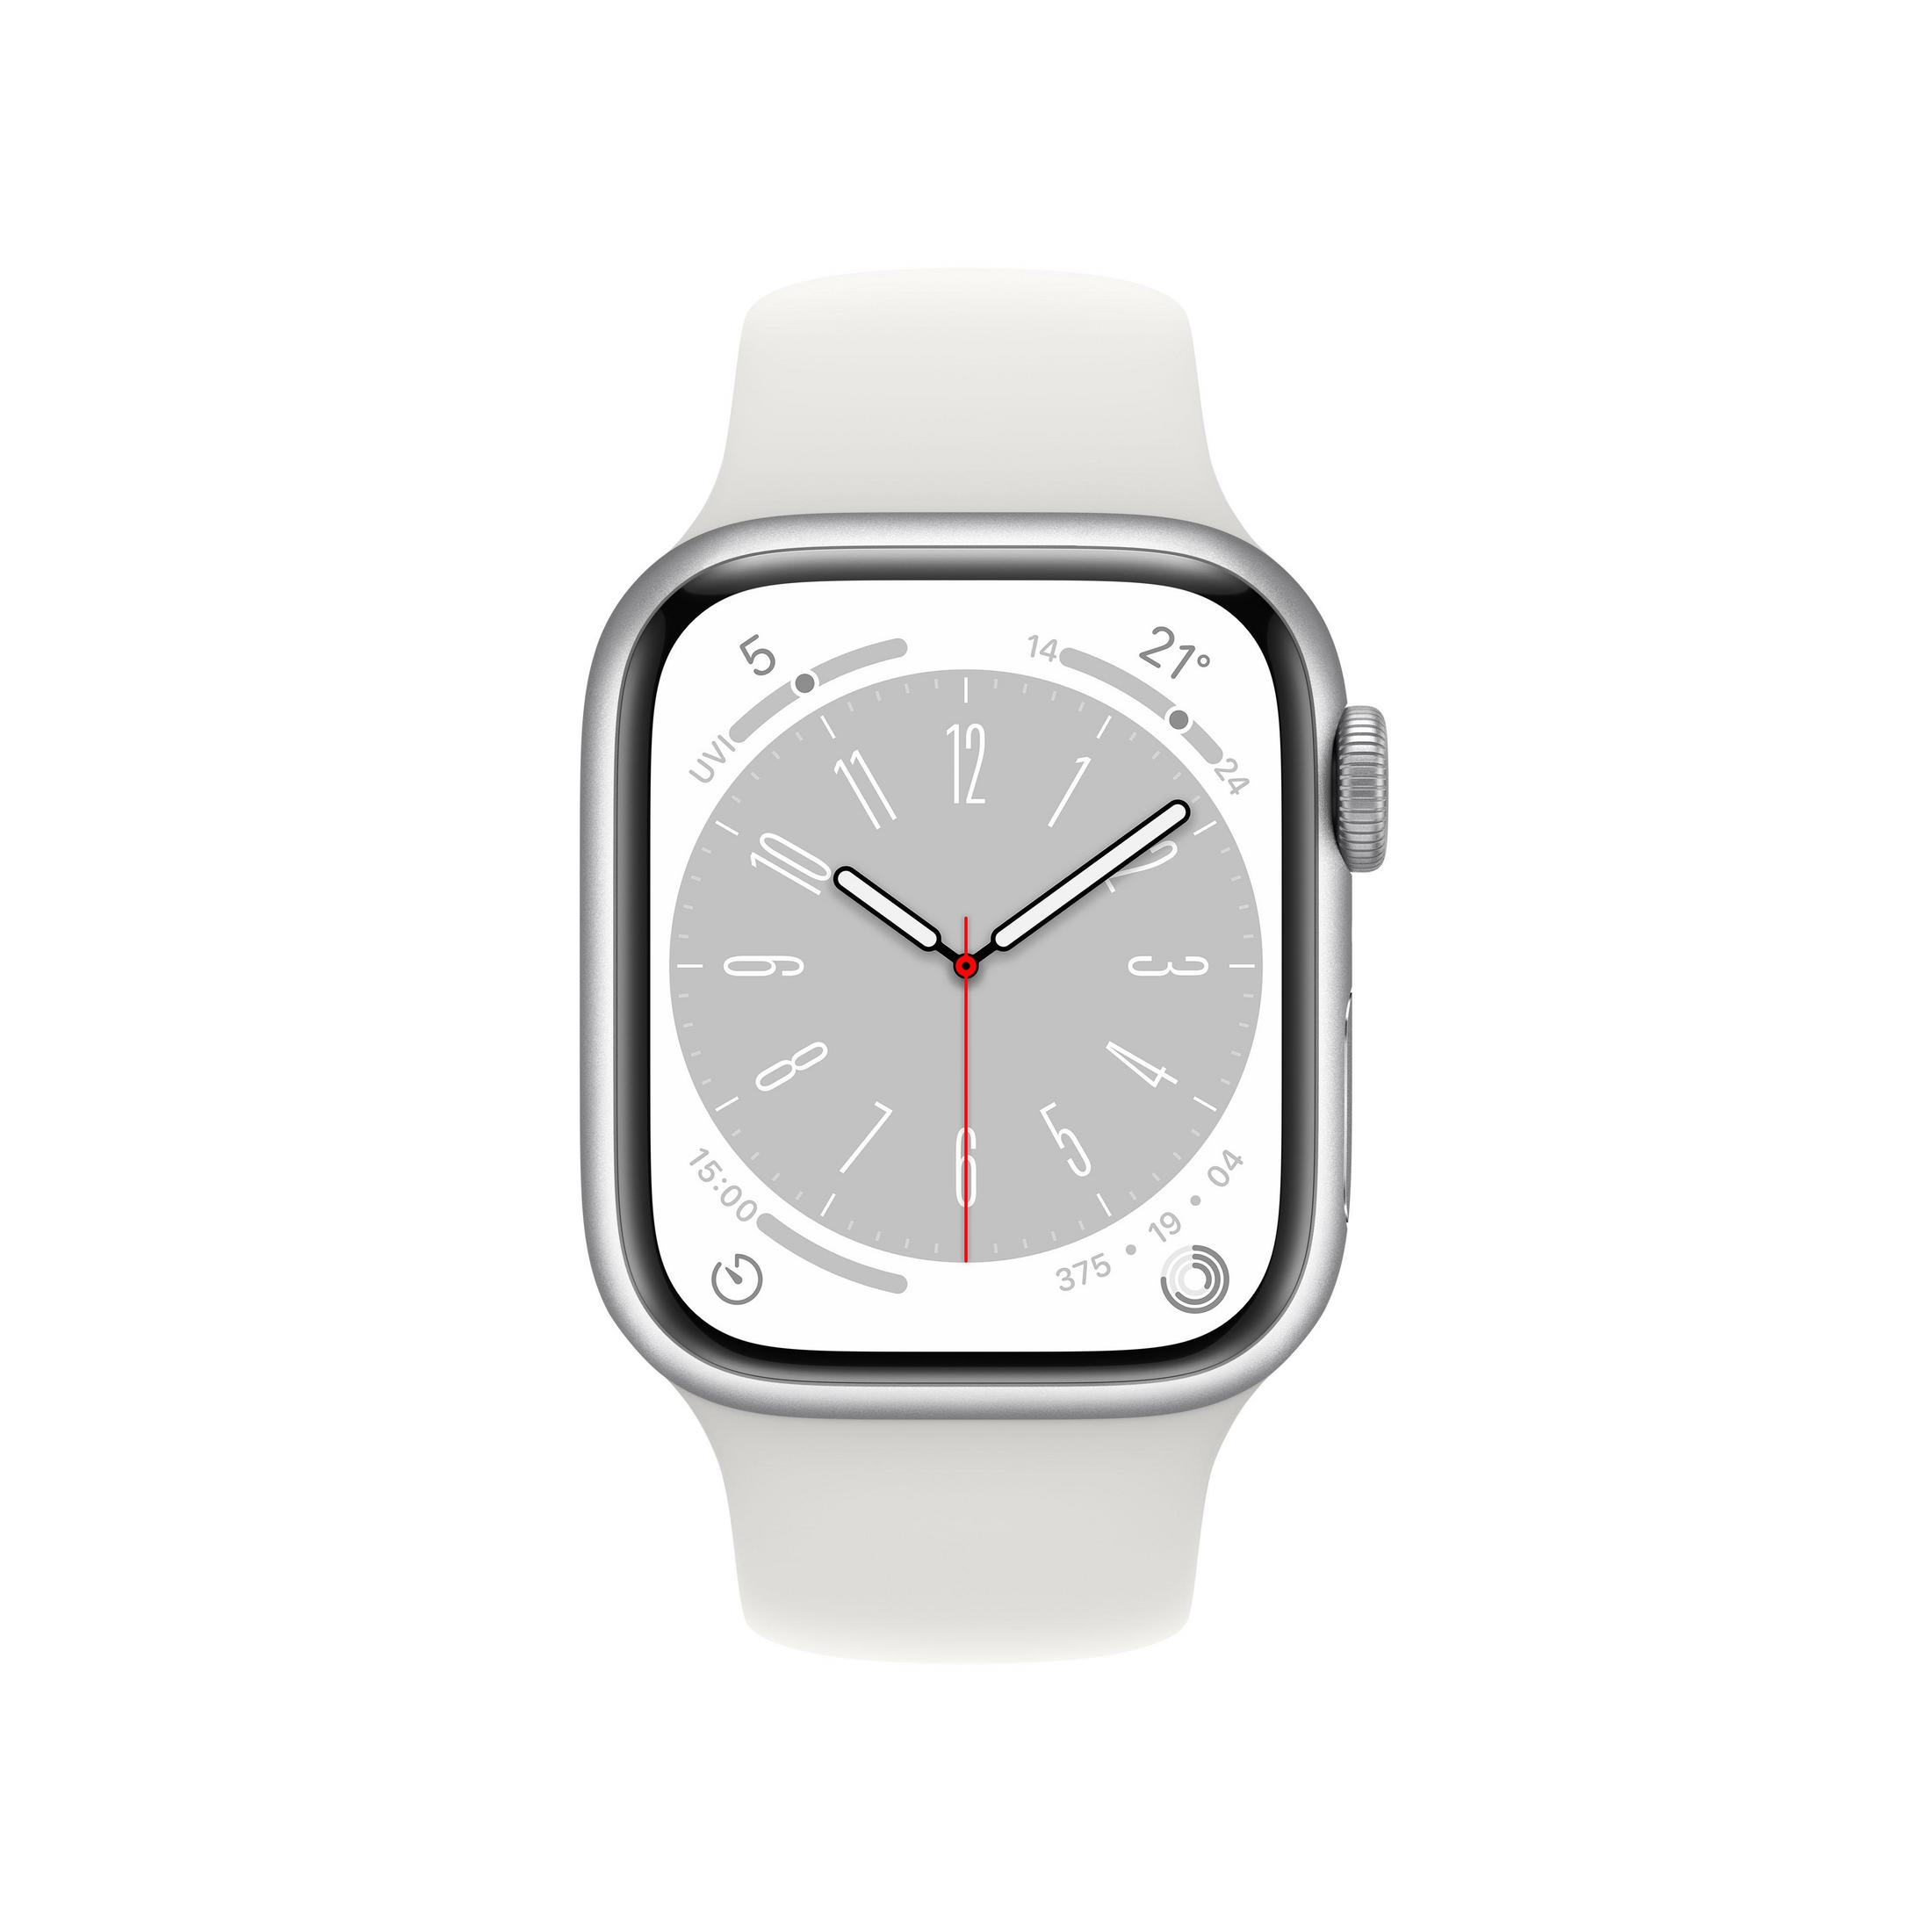 41 W WHITE Fluorelastomer, REG Gehäuse: Silber 130 S8 mm, Weiß, - Aluminium SIL SPORT GPS+CEL ALU APPLE Armband: Smartwatch 200